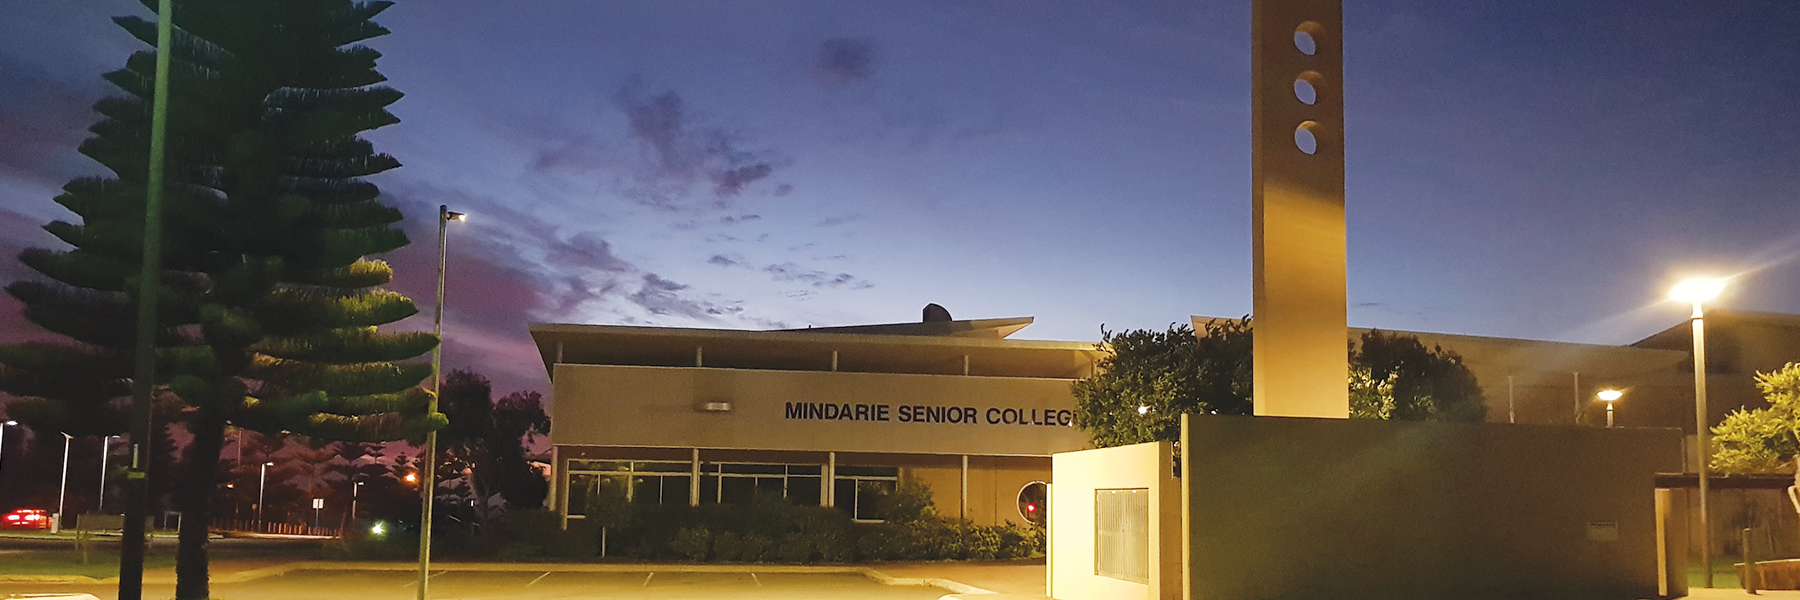 Mindarie Senior College  Where your future begins